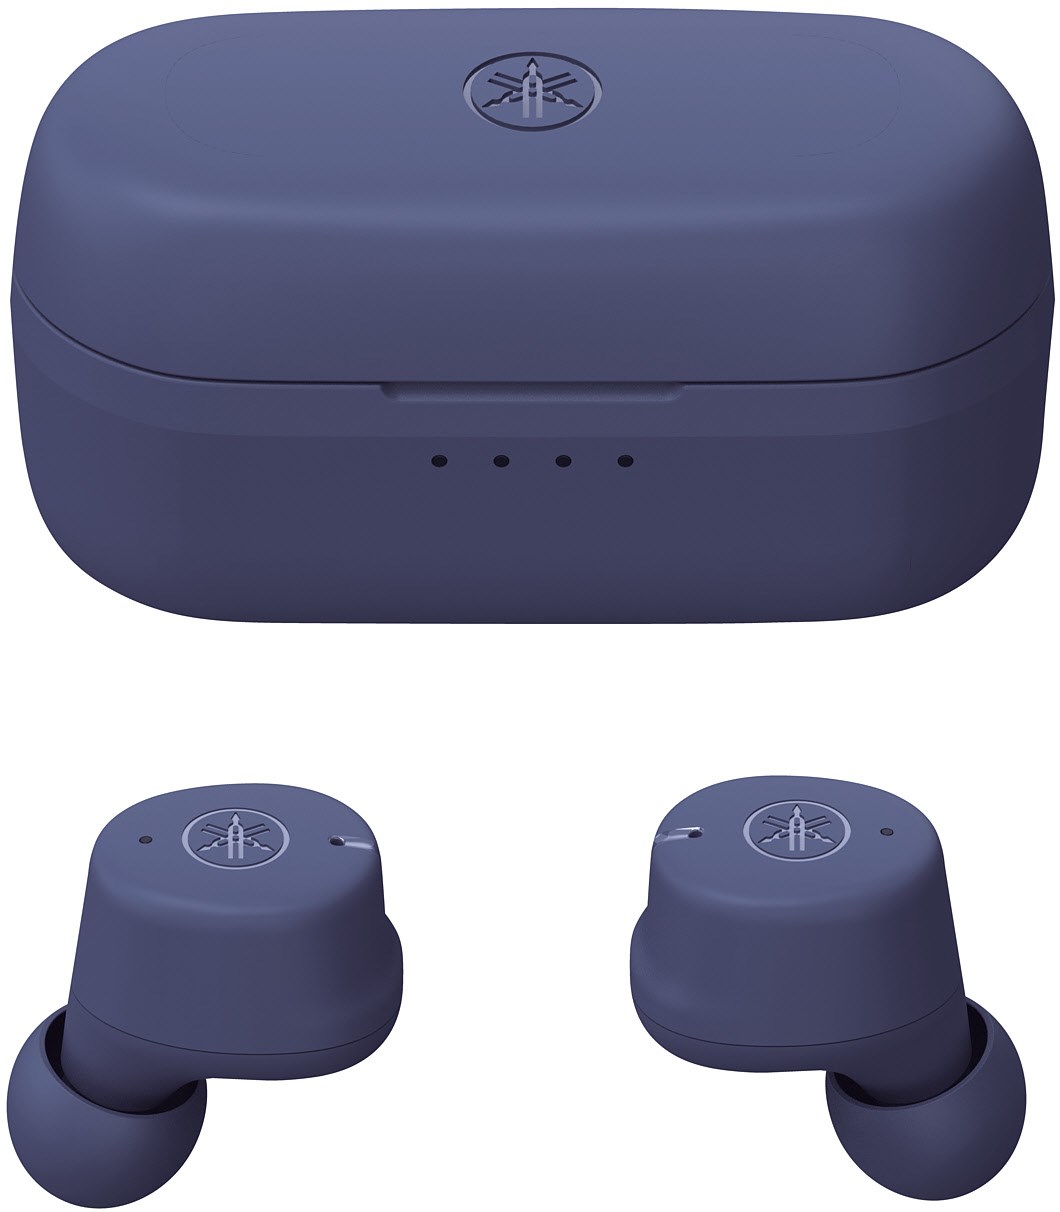 TW-E3C True Wireless Kopfhörer blau